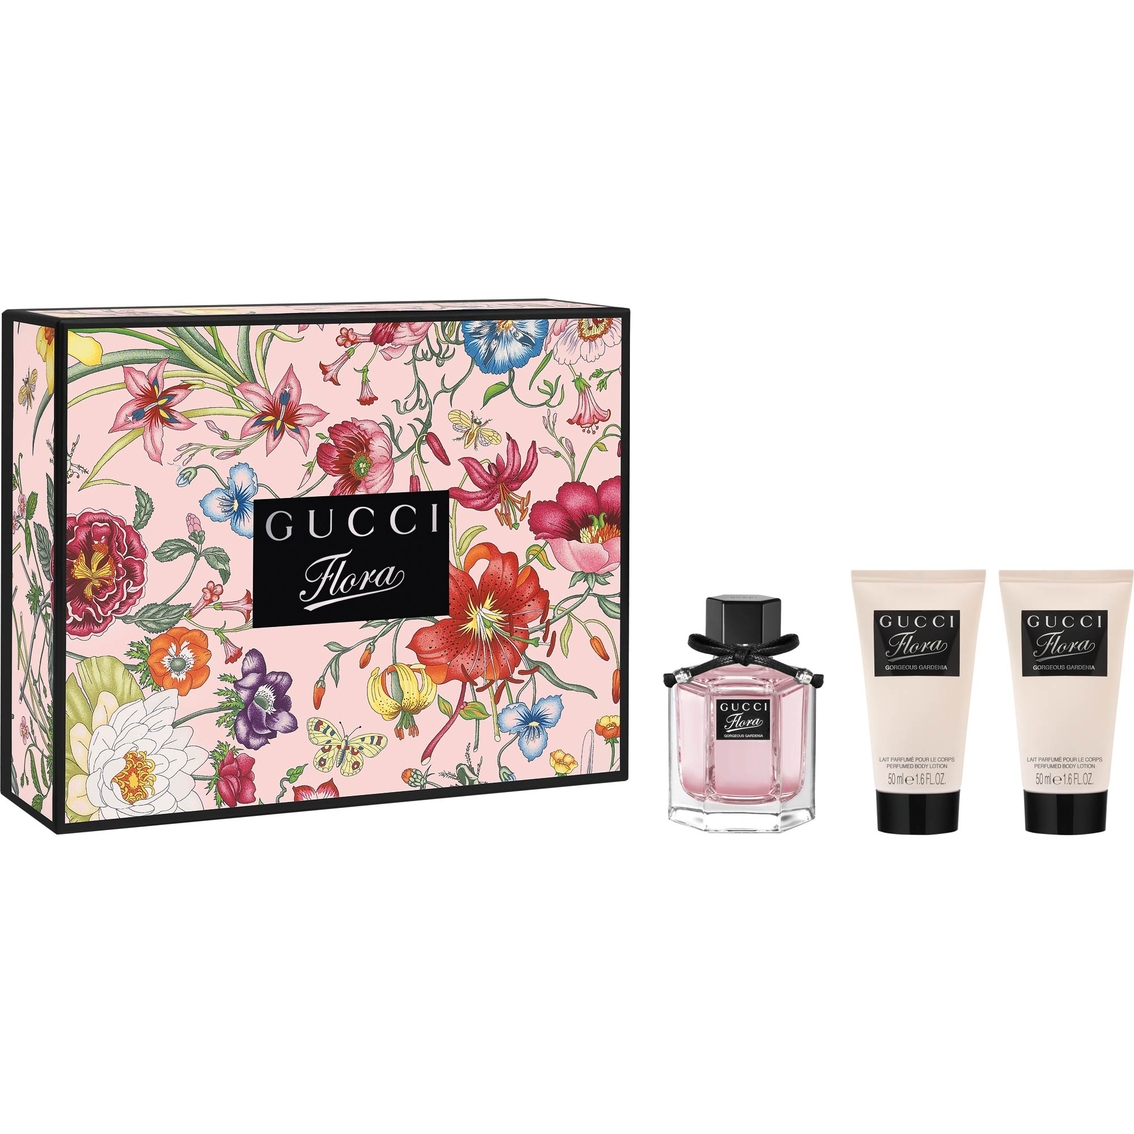 Gucci Flora Gardenia Gift Set | Gifts 